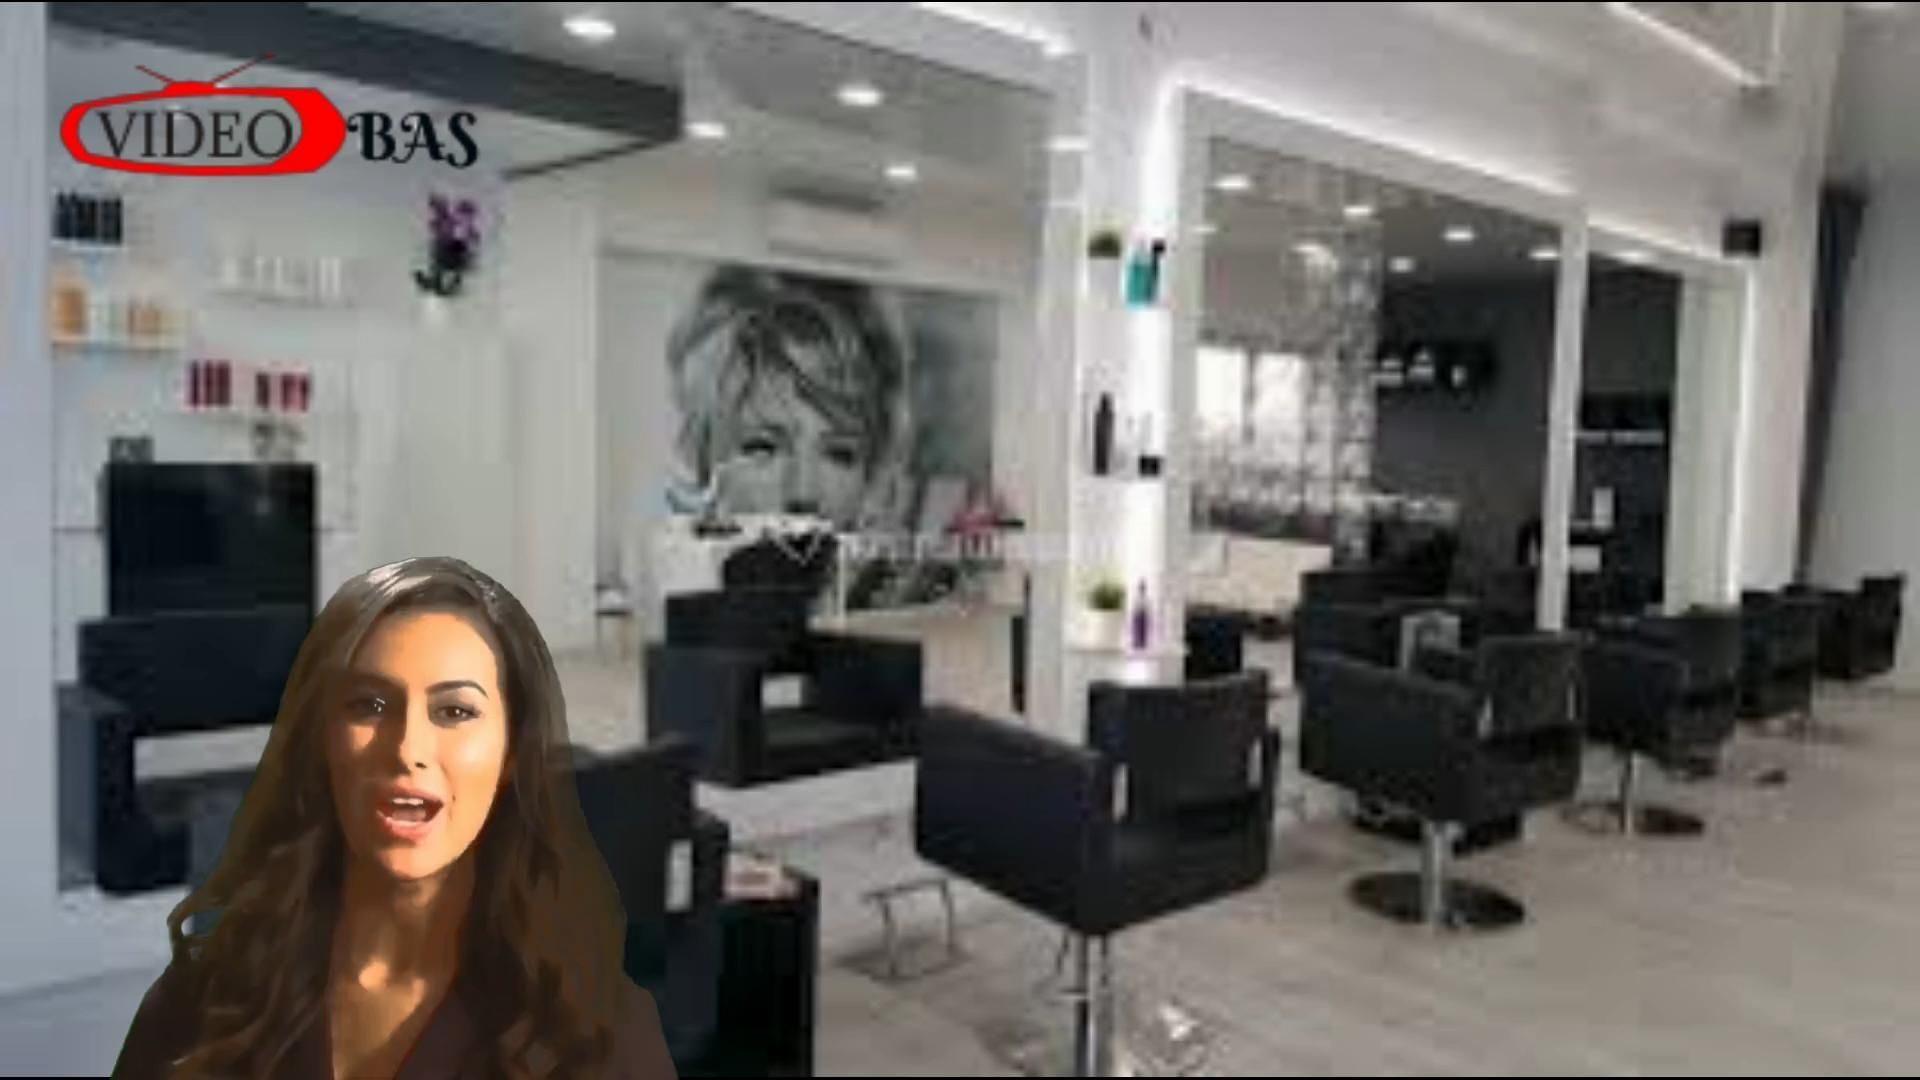 Hair Salon in Rome -   22 beauty Videos salon ideas